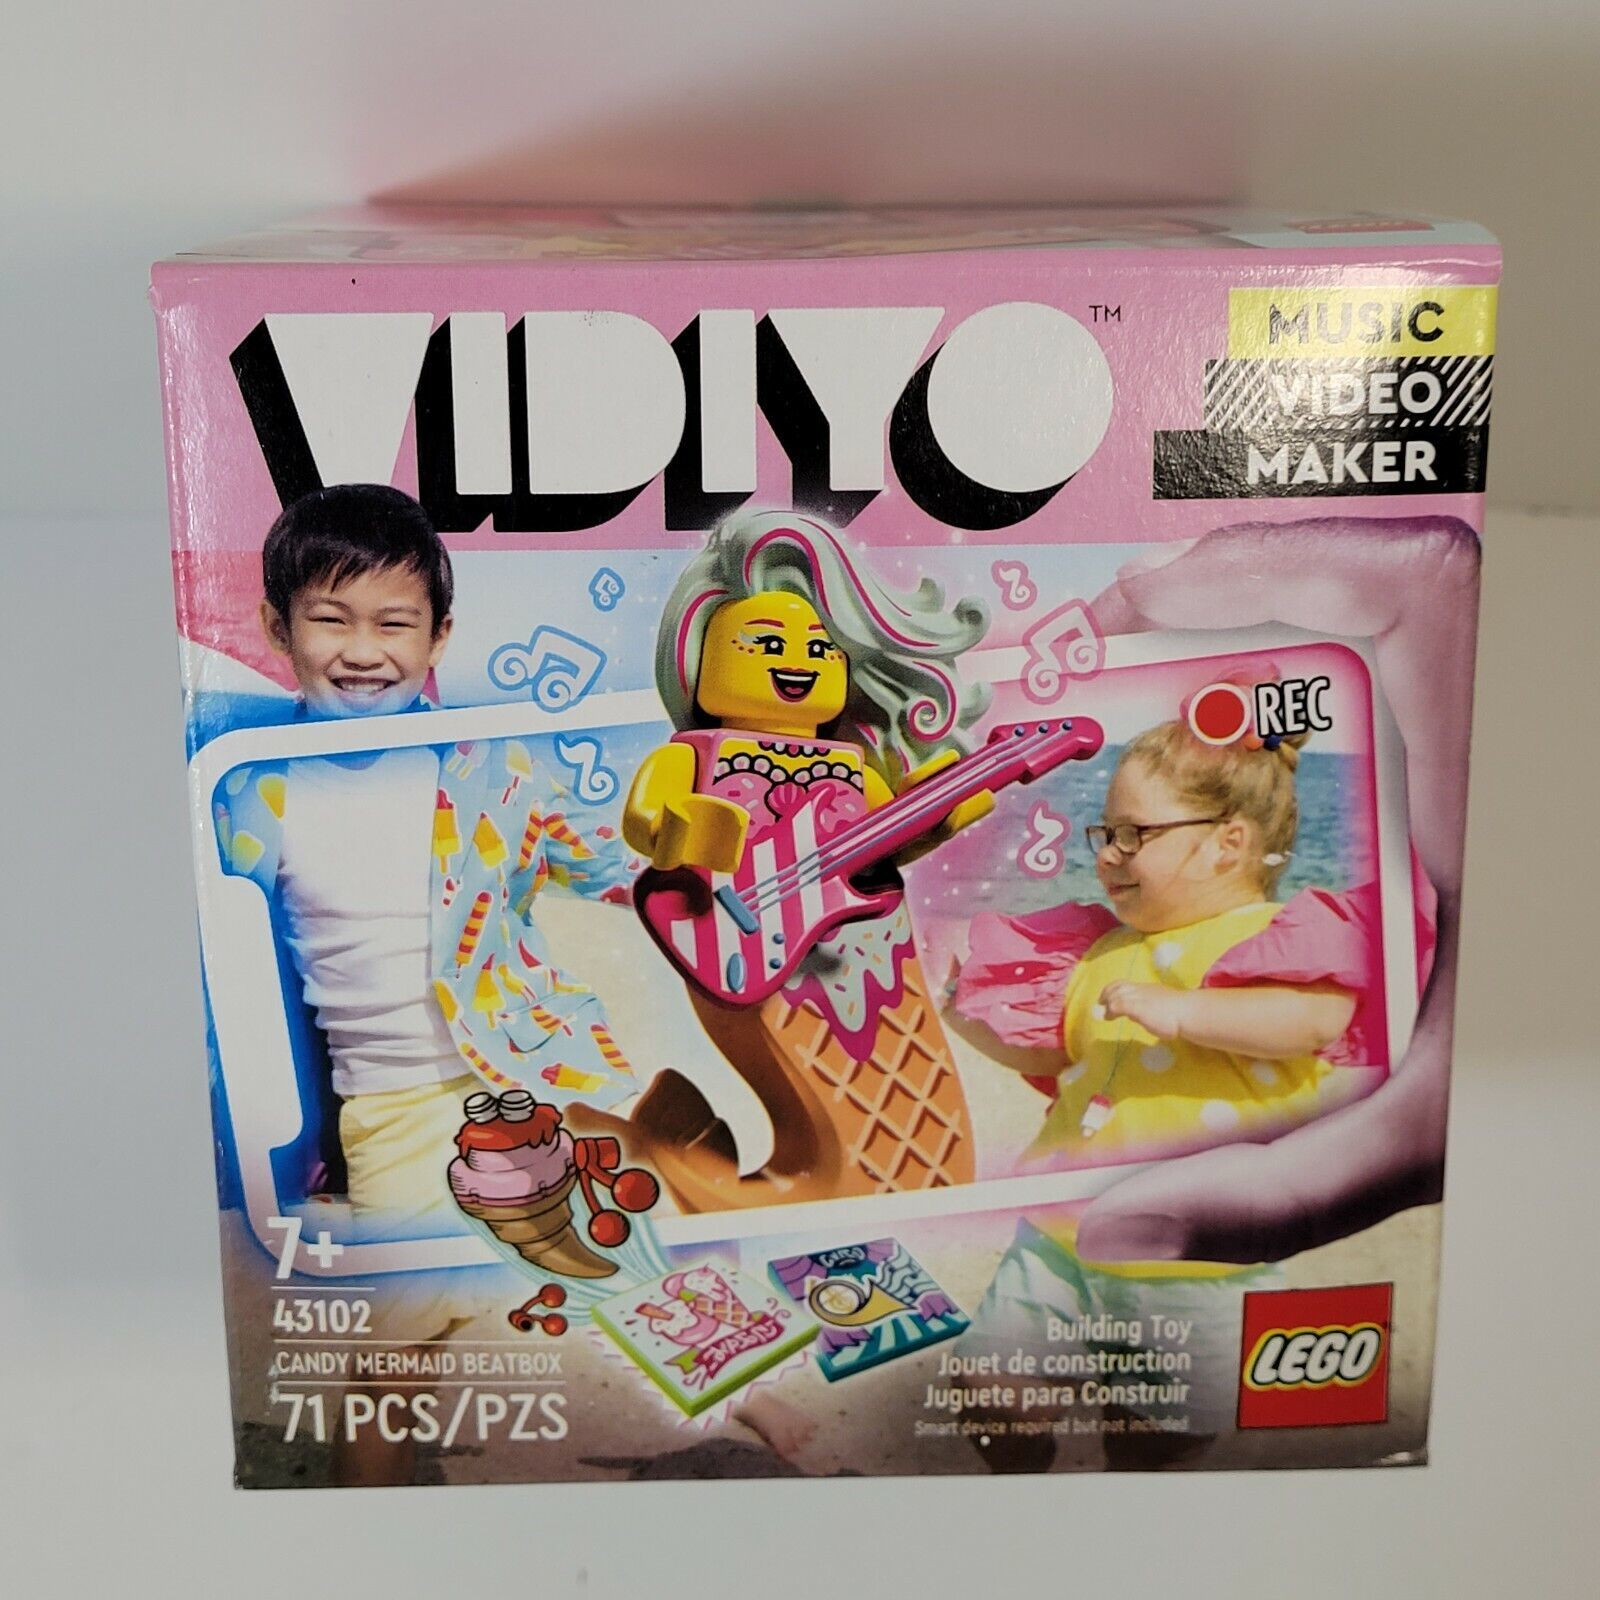 Primary image for LEGO VIDIYO Candy Mermaid BeatBox 43102 Build toy, 71 peices, New